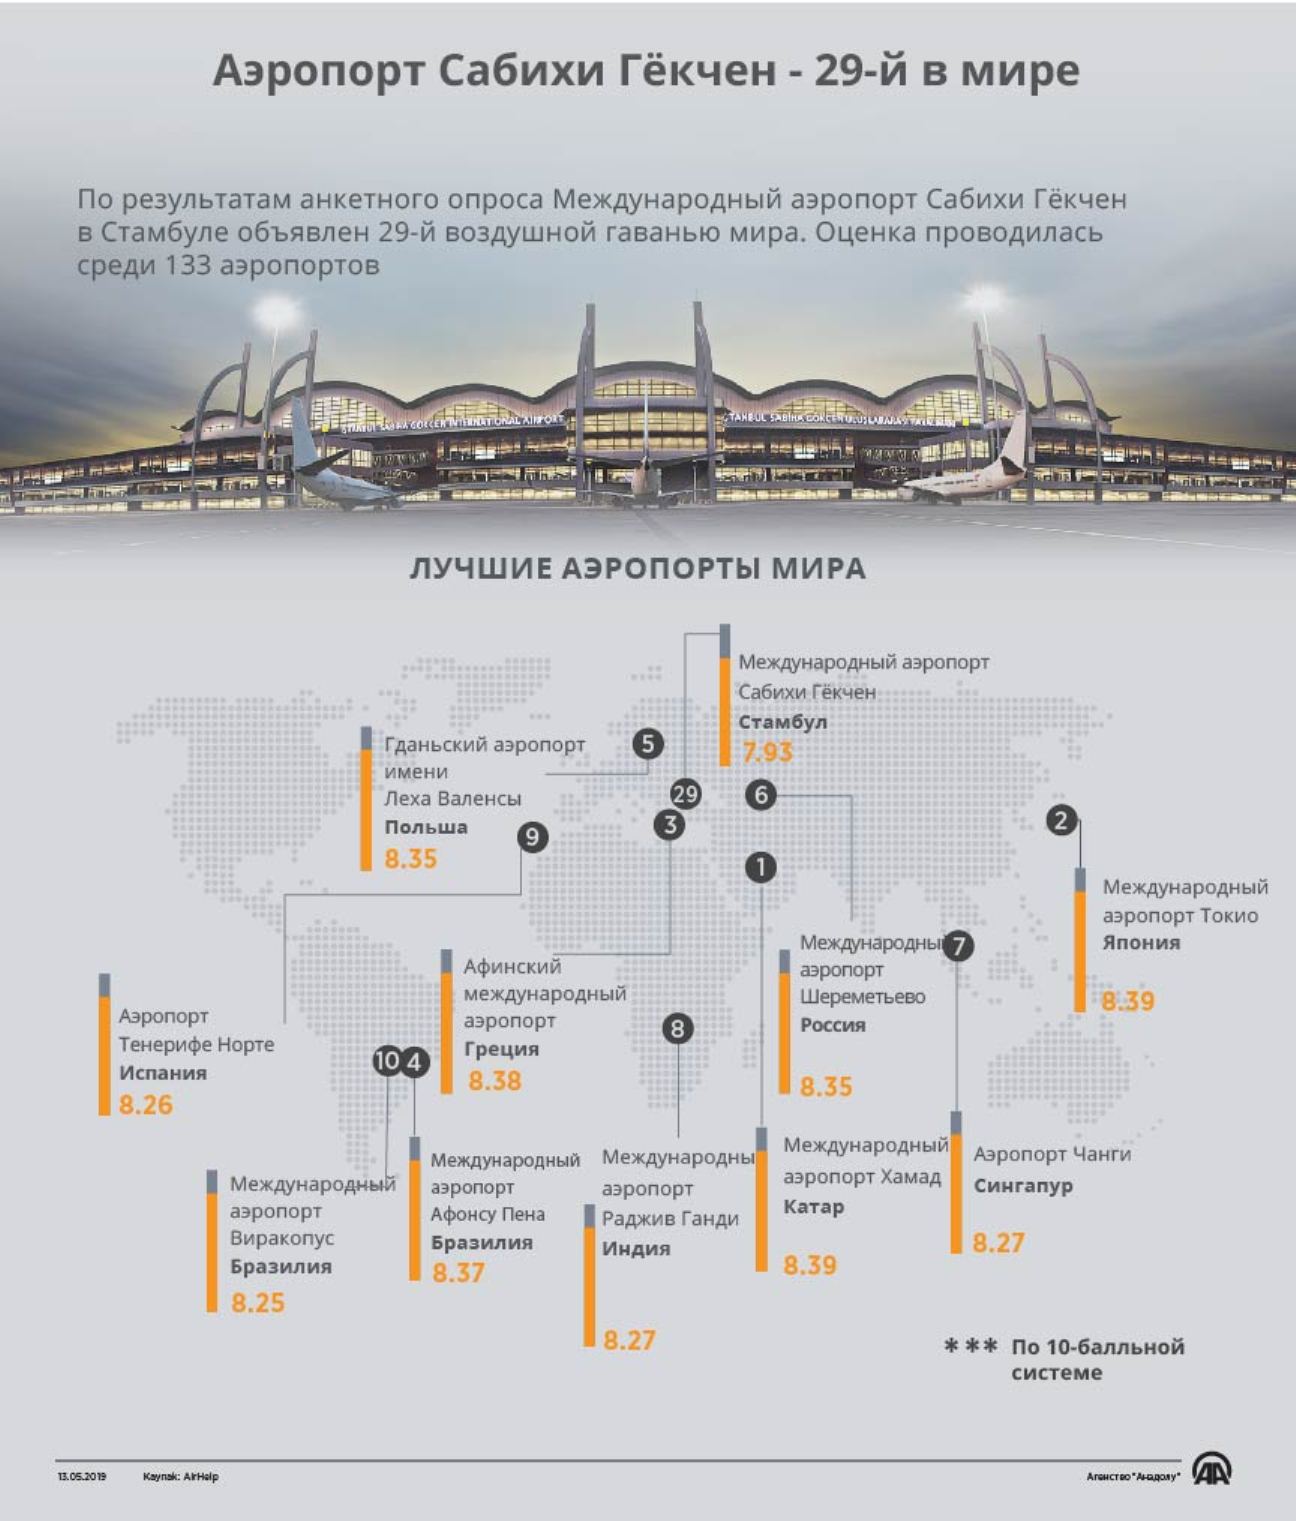 Аэропорт Сабихи Гекчен – 29-й в мире